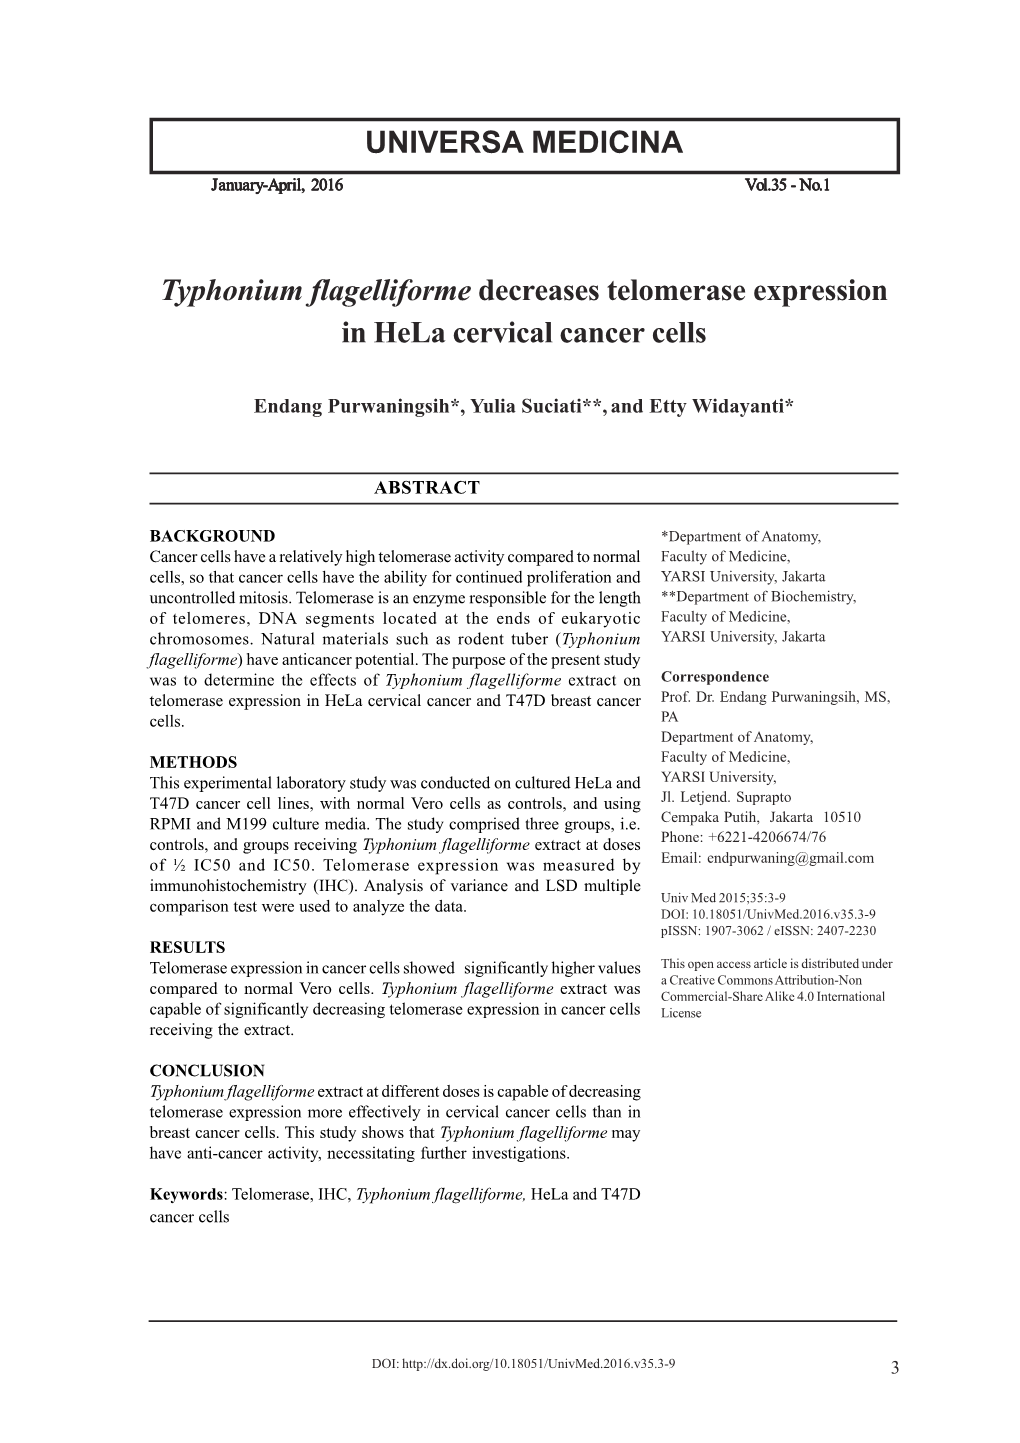 Typhonium Flagelliforme Decreases Telomerase Expression in Hela Cervical Cancer Cells